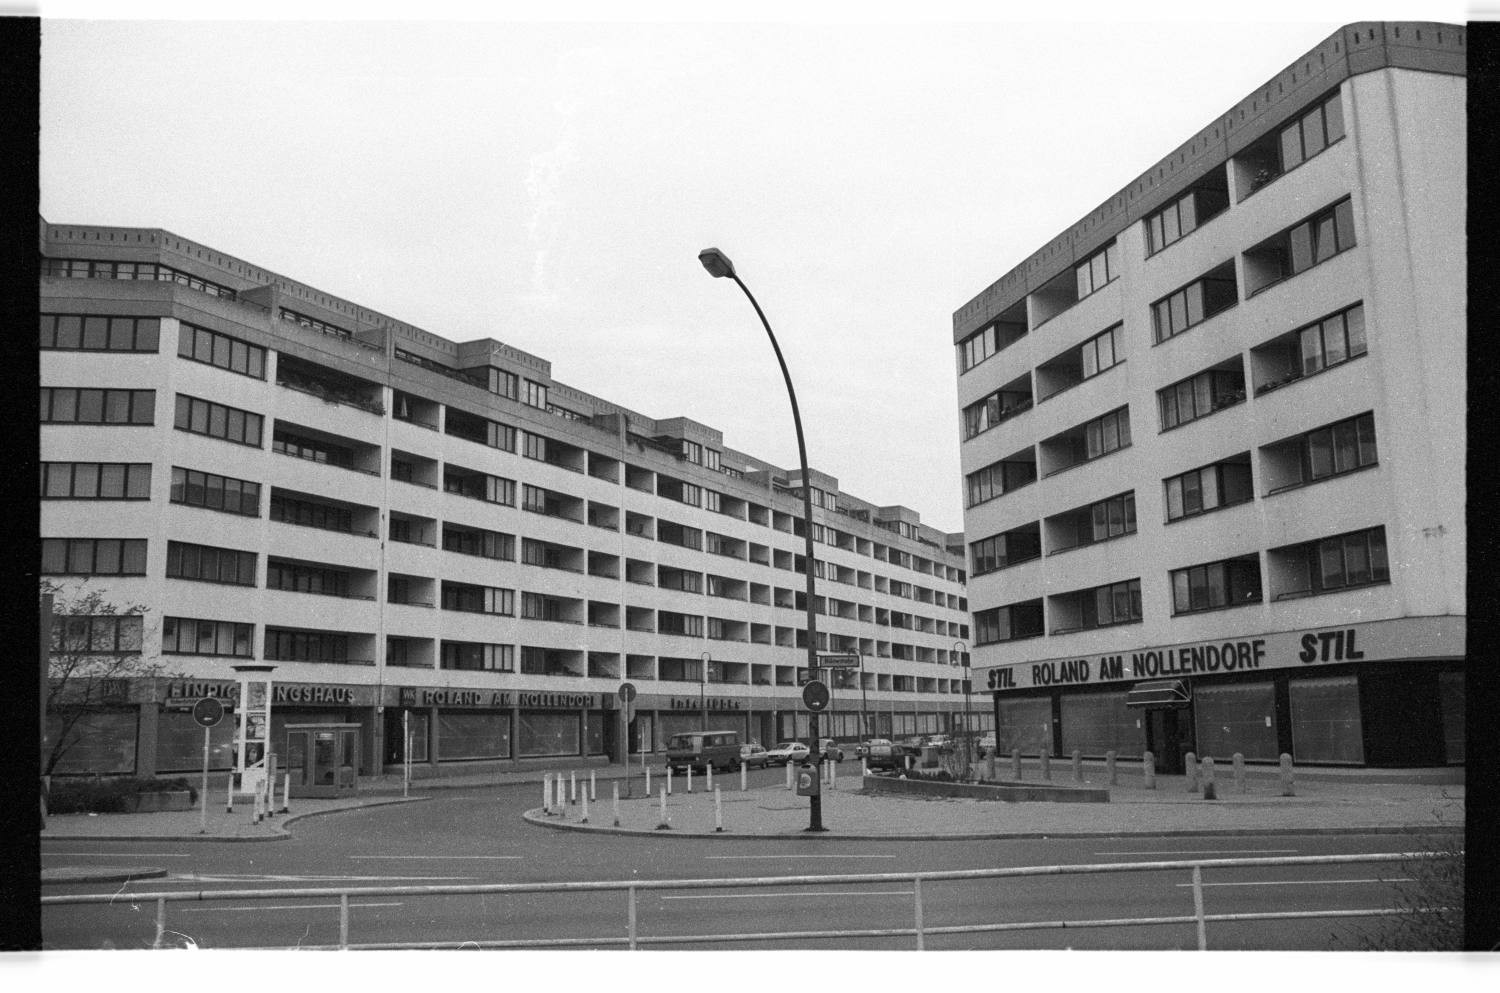 Kleinbildnegative: Mietshäuser, Nollendorfplatz, 1982 (Museen Tempelhof-Schöneberg/Jürgen Henschel RR-F)